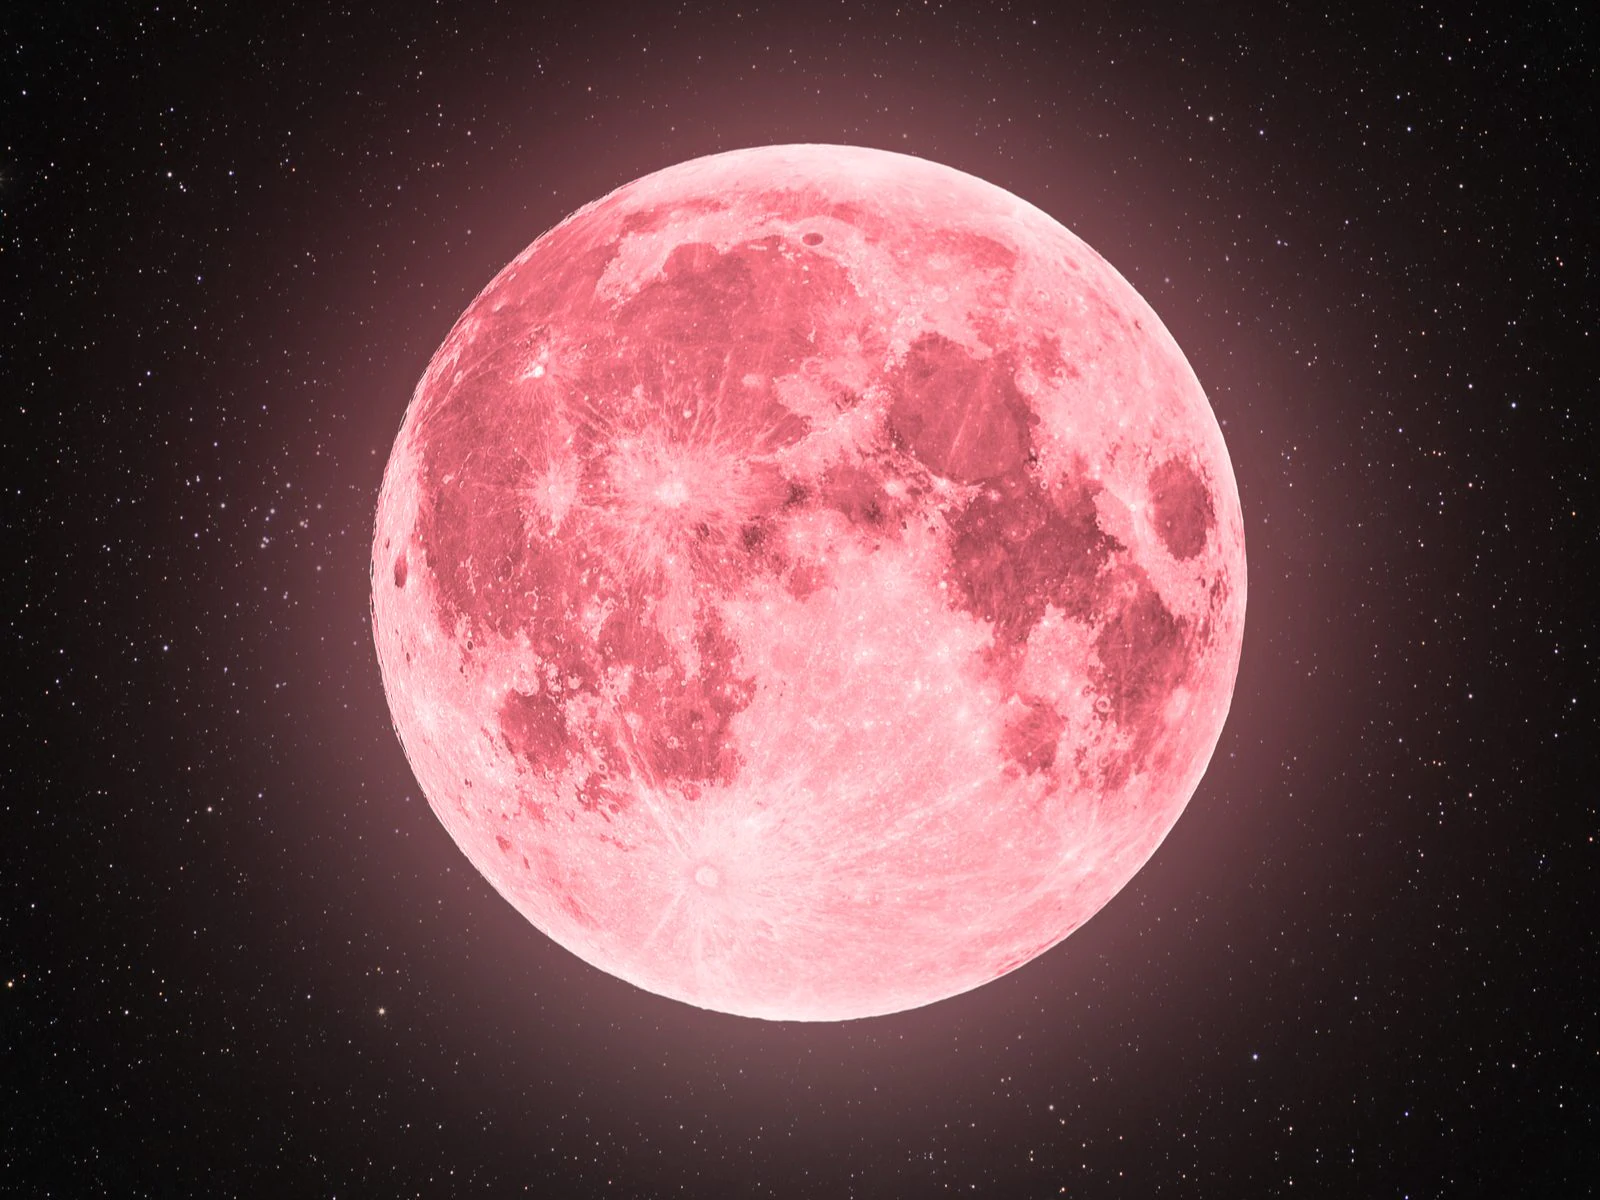 Amazing sight of Pink Moon in the sky, know the religious and scientific significance ਅਸਮਾਨ ‘ਚ ਨਜ਼ਰ ਆਇਆ ਪਿੰਕ ਮੂਨ ਦਾ ਅਦਭੁਤ ਦ੍ਰਿਸ਼, ਜਾਣੋ ਧਾਰਮਿਕ ਤੇ ਵਿਗਿਆਨਕ ਮਹੱਤਤਾ